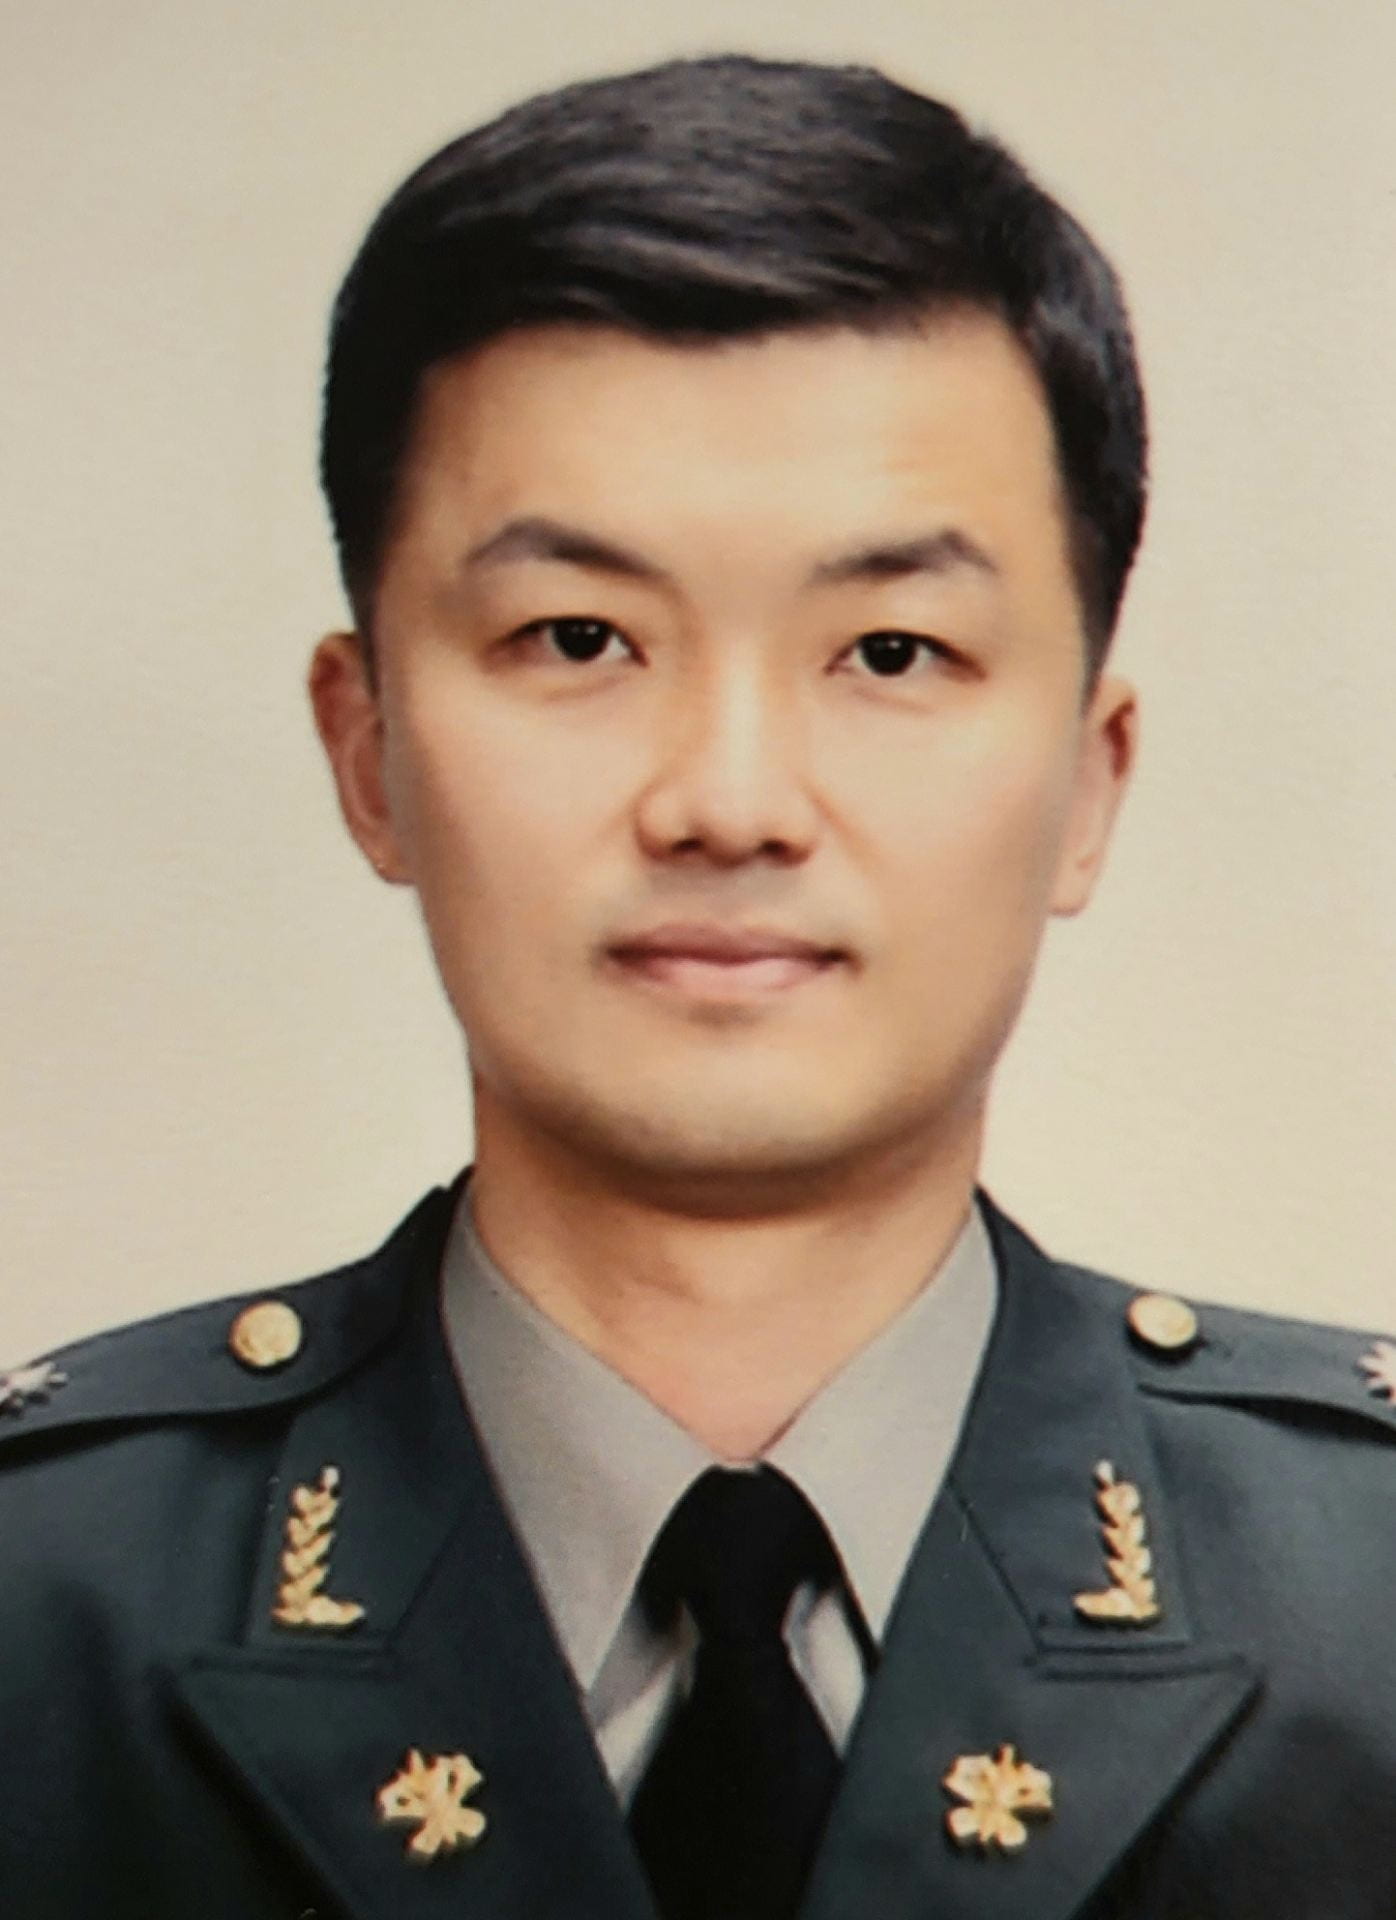 headshot of Donghwan Lee in military uniform